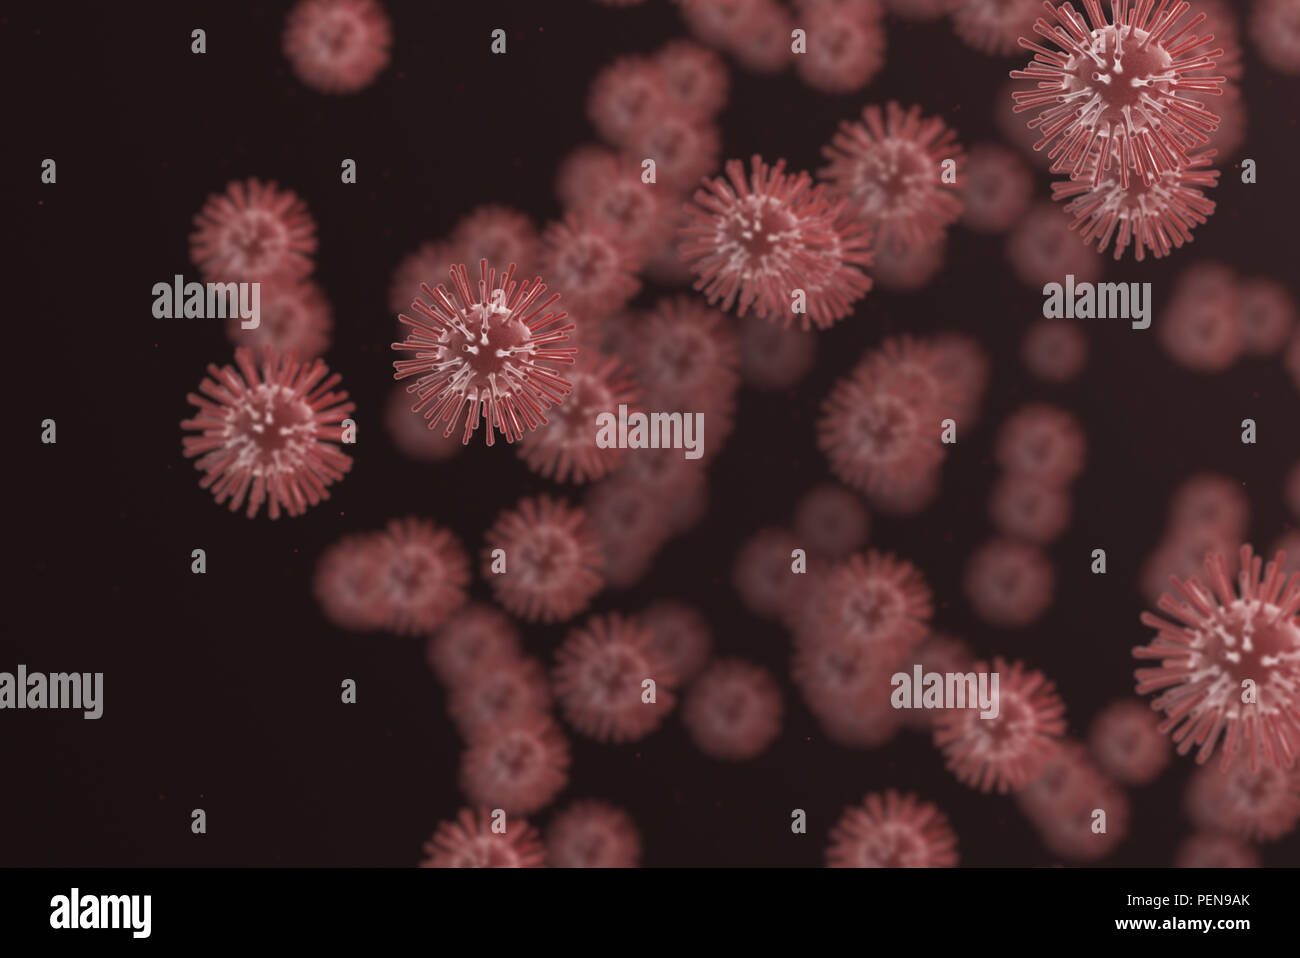 Virus cells close up image Stock Photo